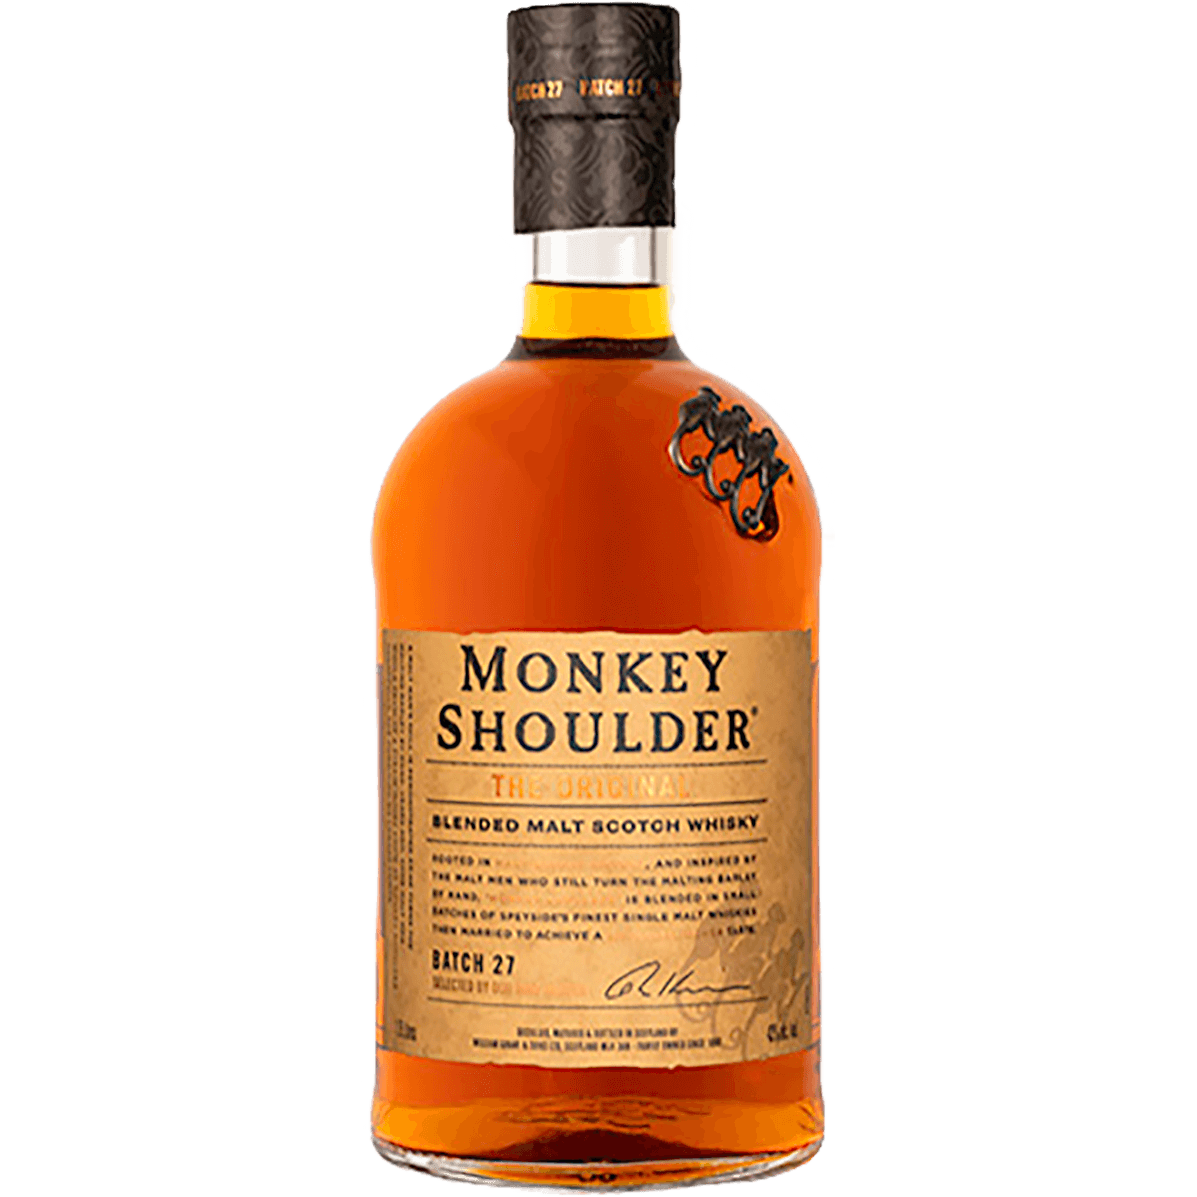 Monkey Shoulder Blended Malt Scotch Whisky / 1.75 Ltr - Marketview Liquor